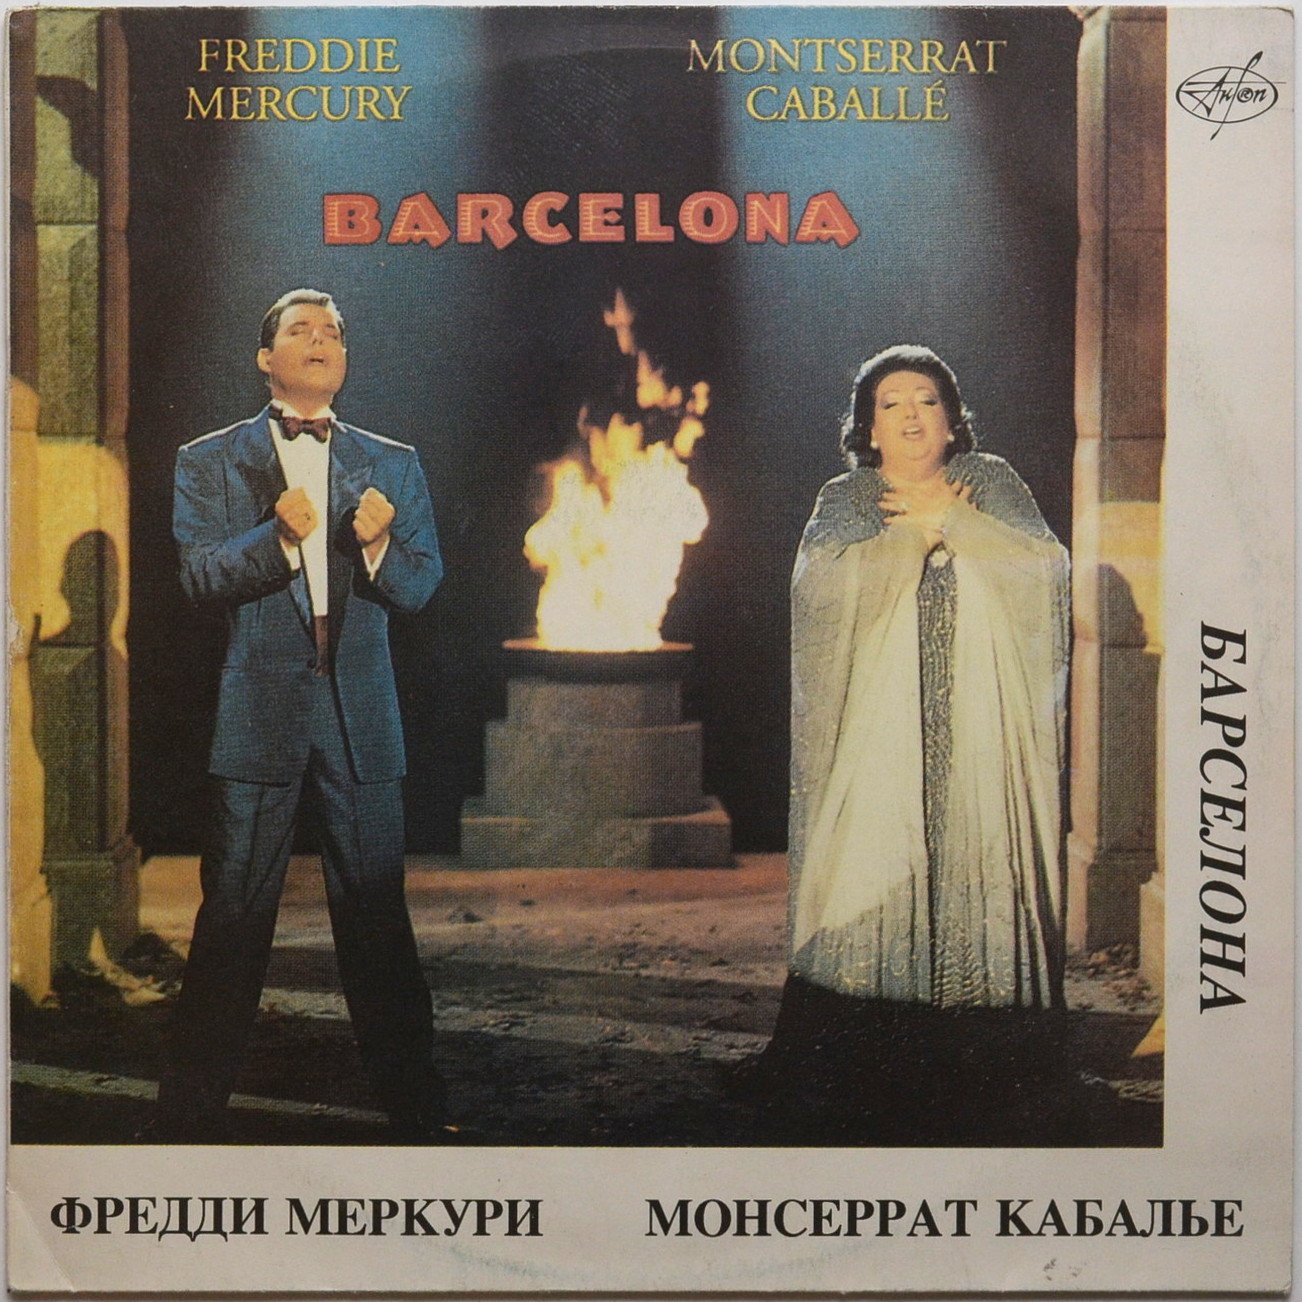 FREDDIE MERCURY & MONTSERRAT CABALLÉ. Barcelona